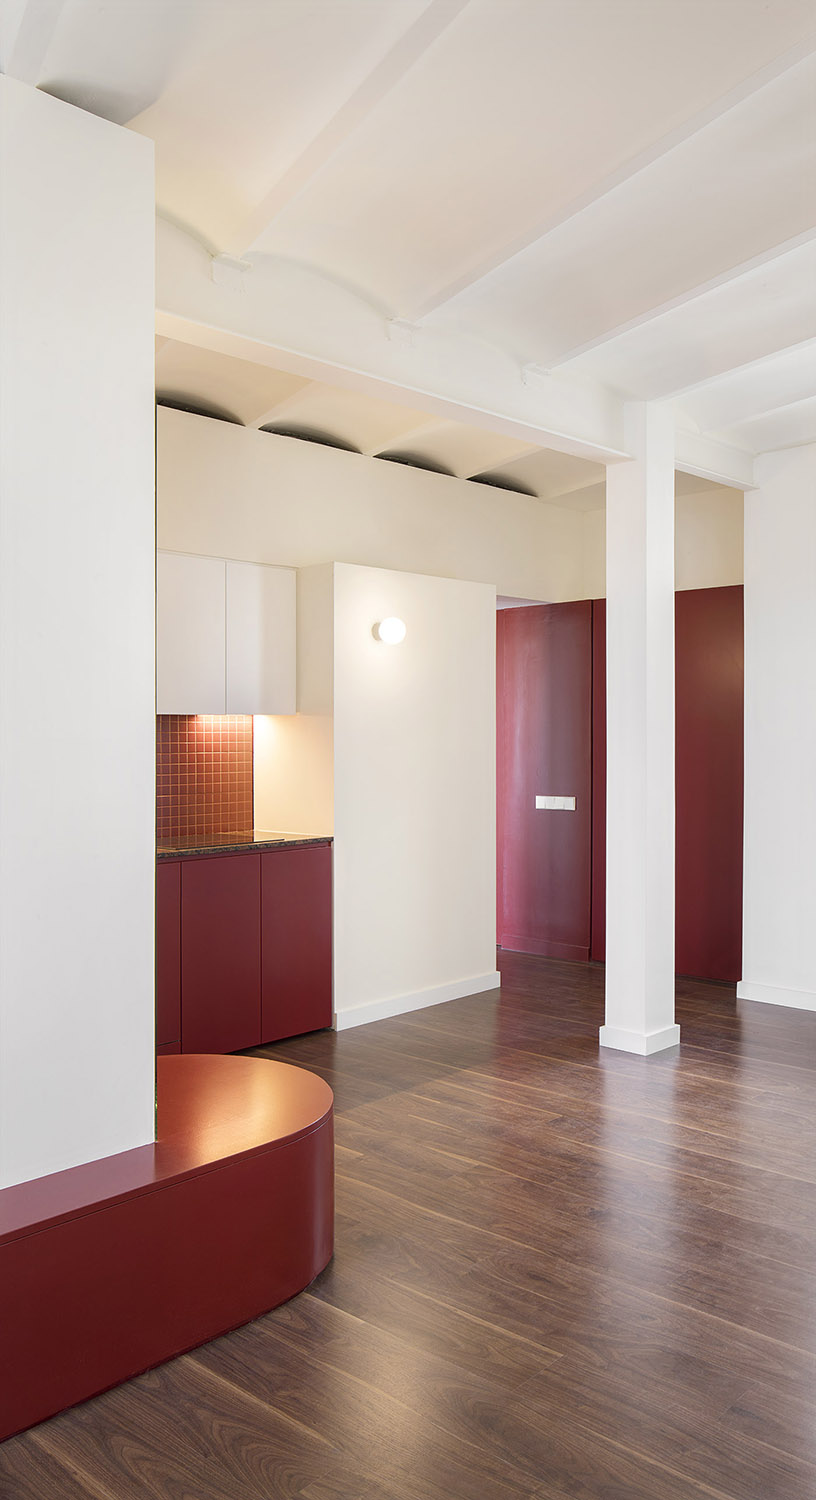 CRU innovative flat renovation project in Barcelona. La SoniaSelena, renovation of a very colorful apartment.